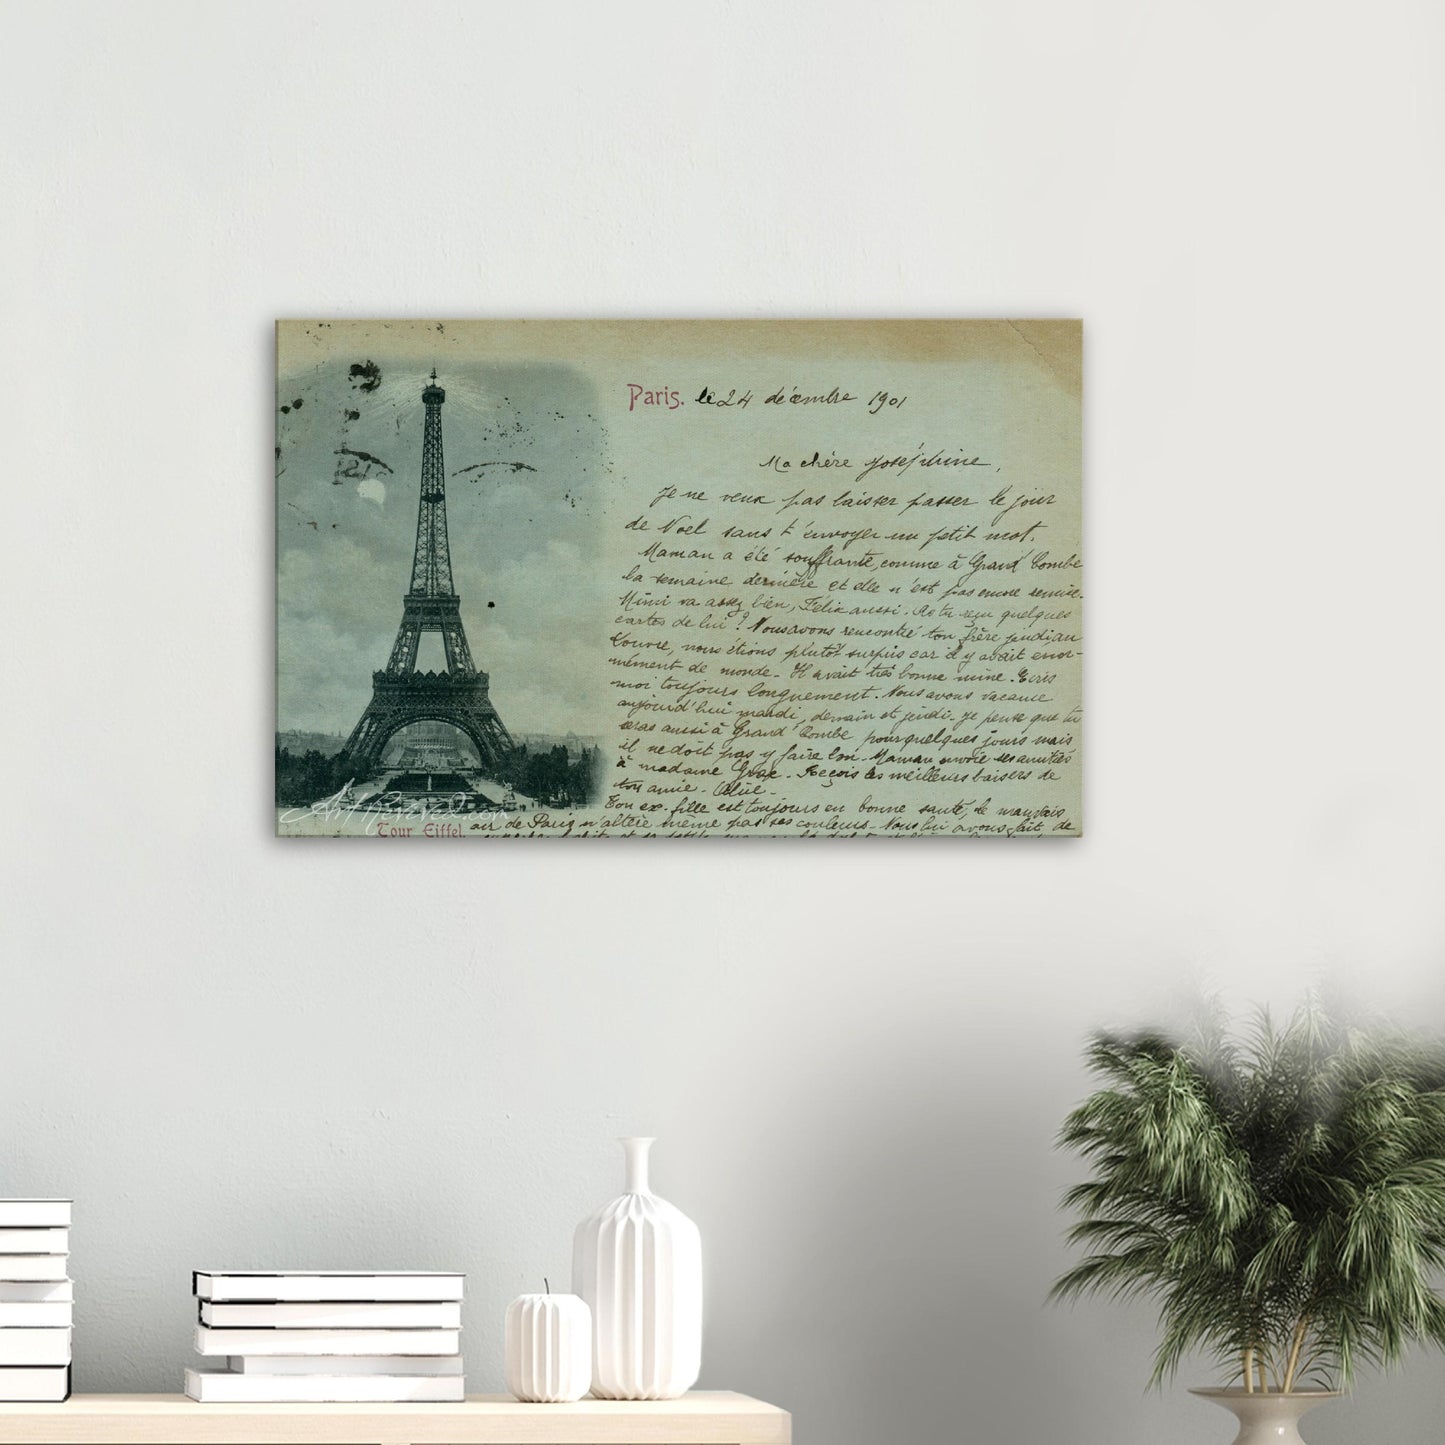 The Eiffel Tower 12-24-1901